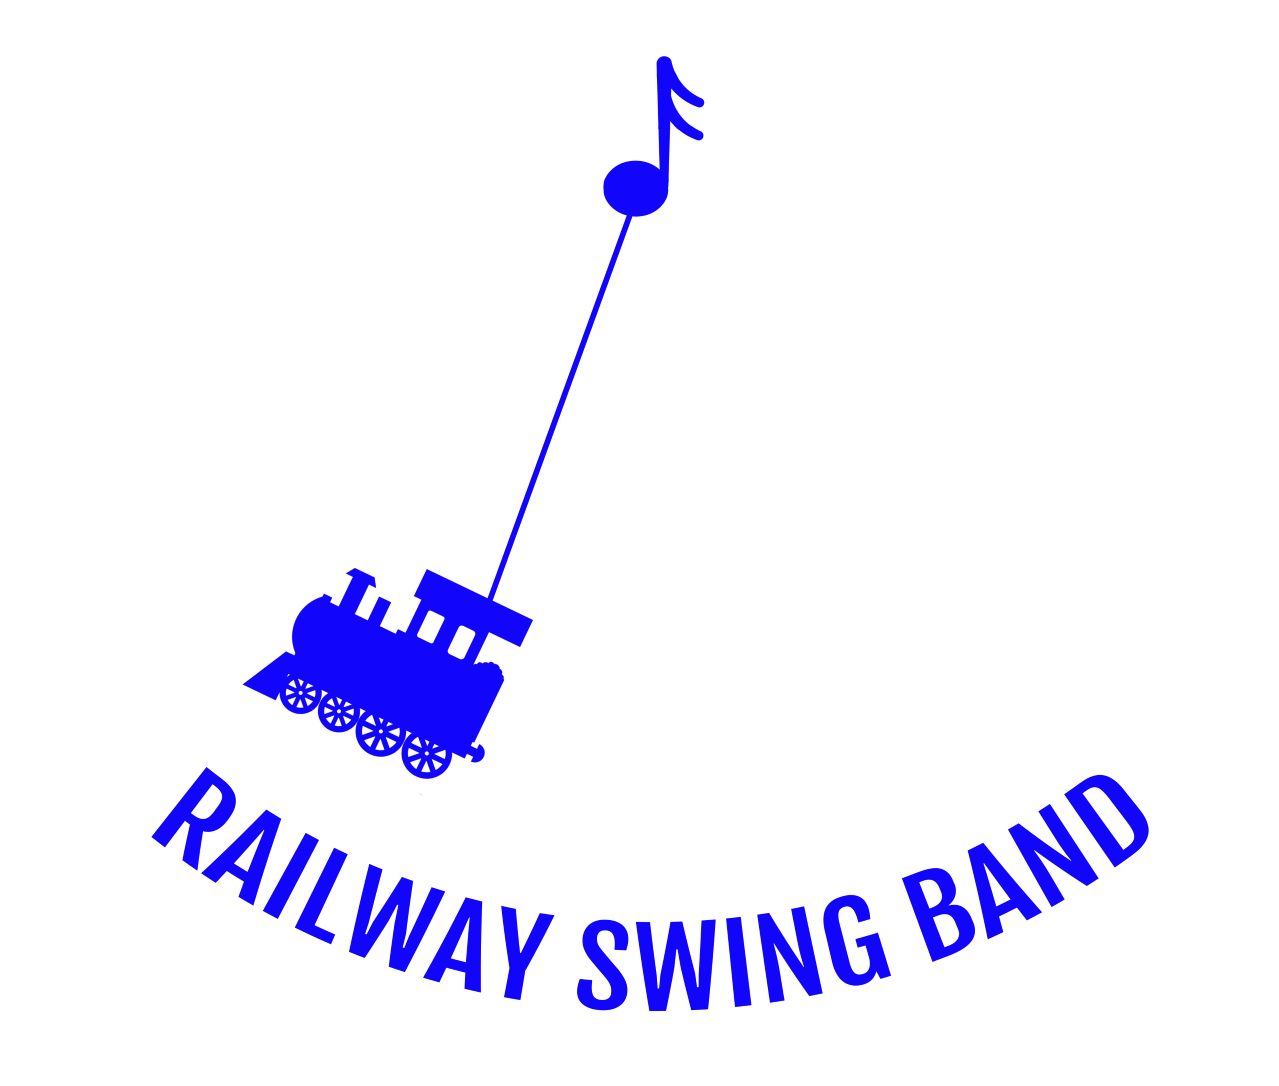 The Railway Swing Band